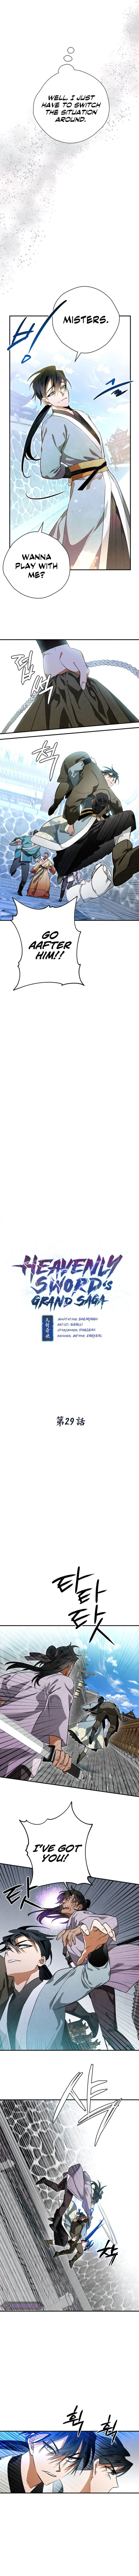 heavenly-swords-grand-saga-chap-29-5